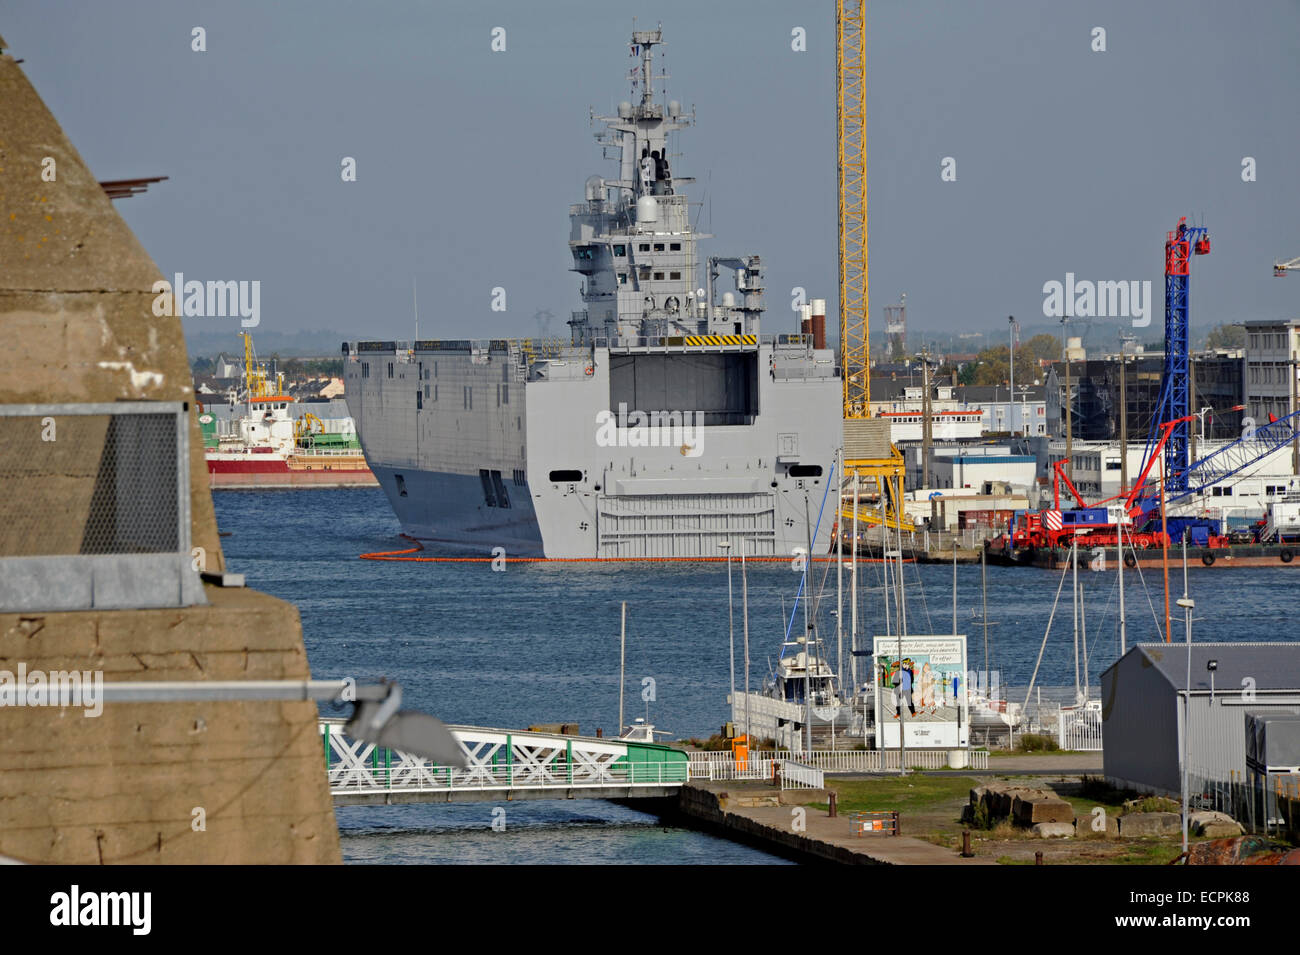 Clase Mistral Vladivostok de Rusia,landing helicopter dock,LHD,en el puerto de Saint-Nazaire,Loire-Atlantique,Francia Foto de stock